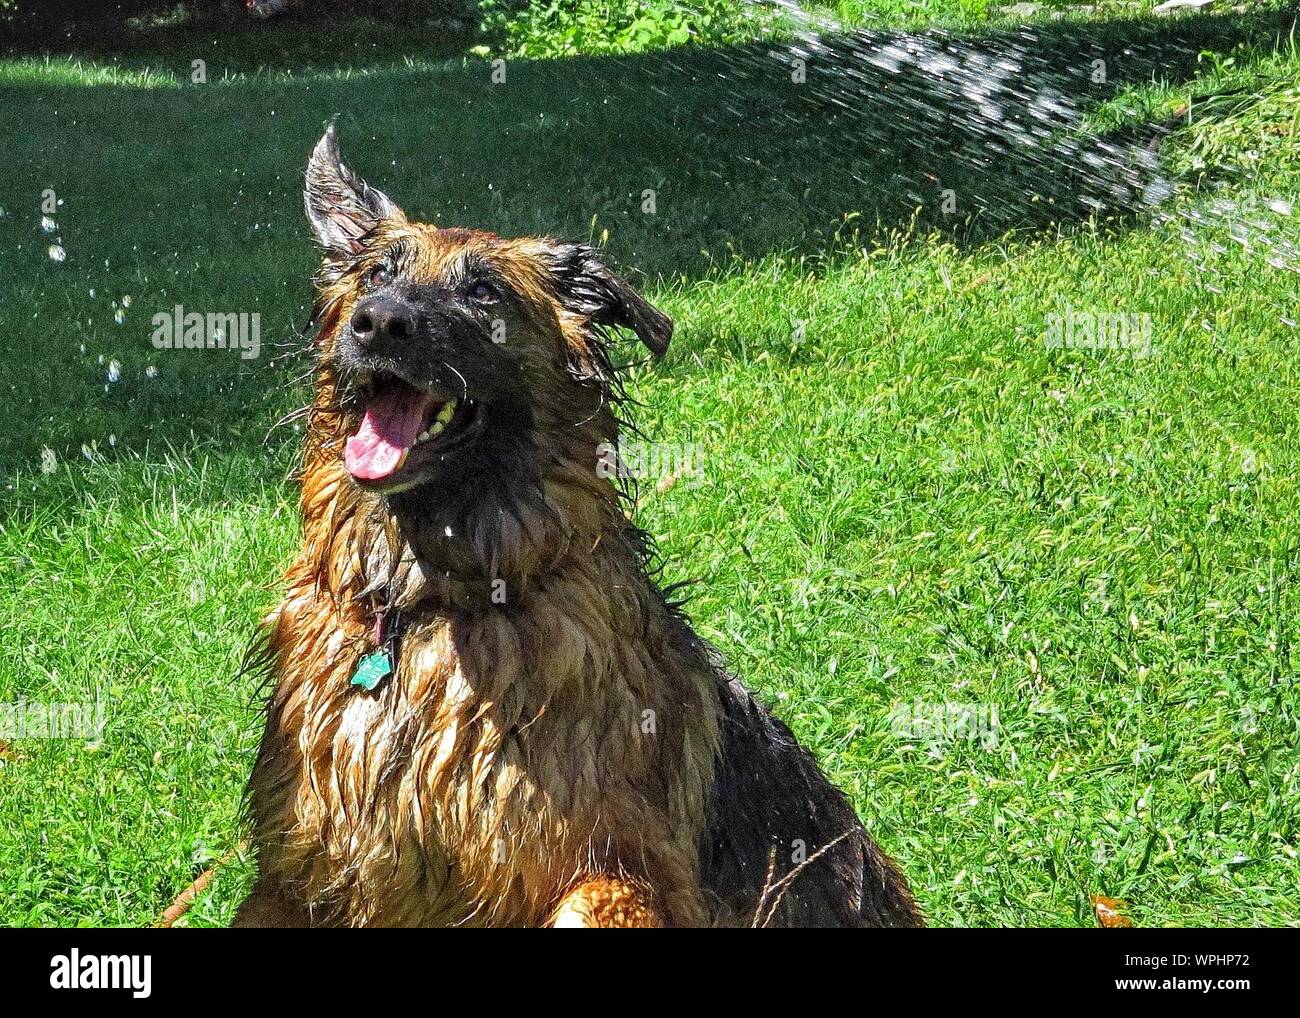 Wet German Shepherd Playing On Grass With Water Splash In Back Yard Stock Photo